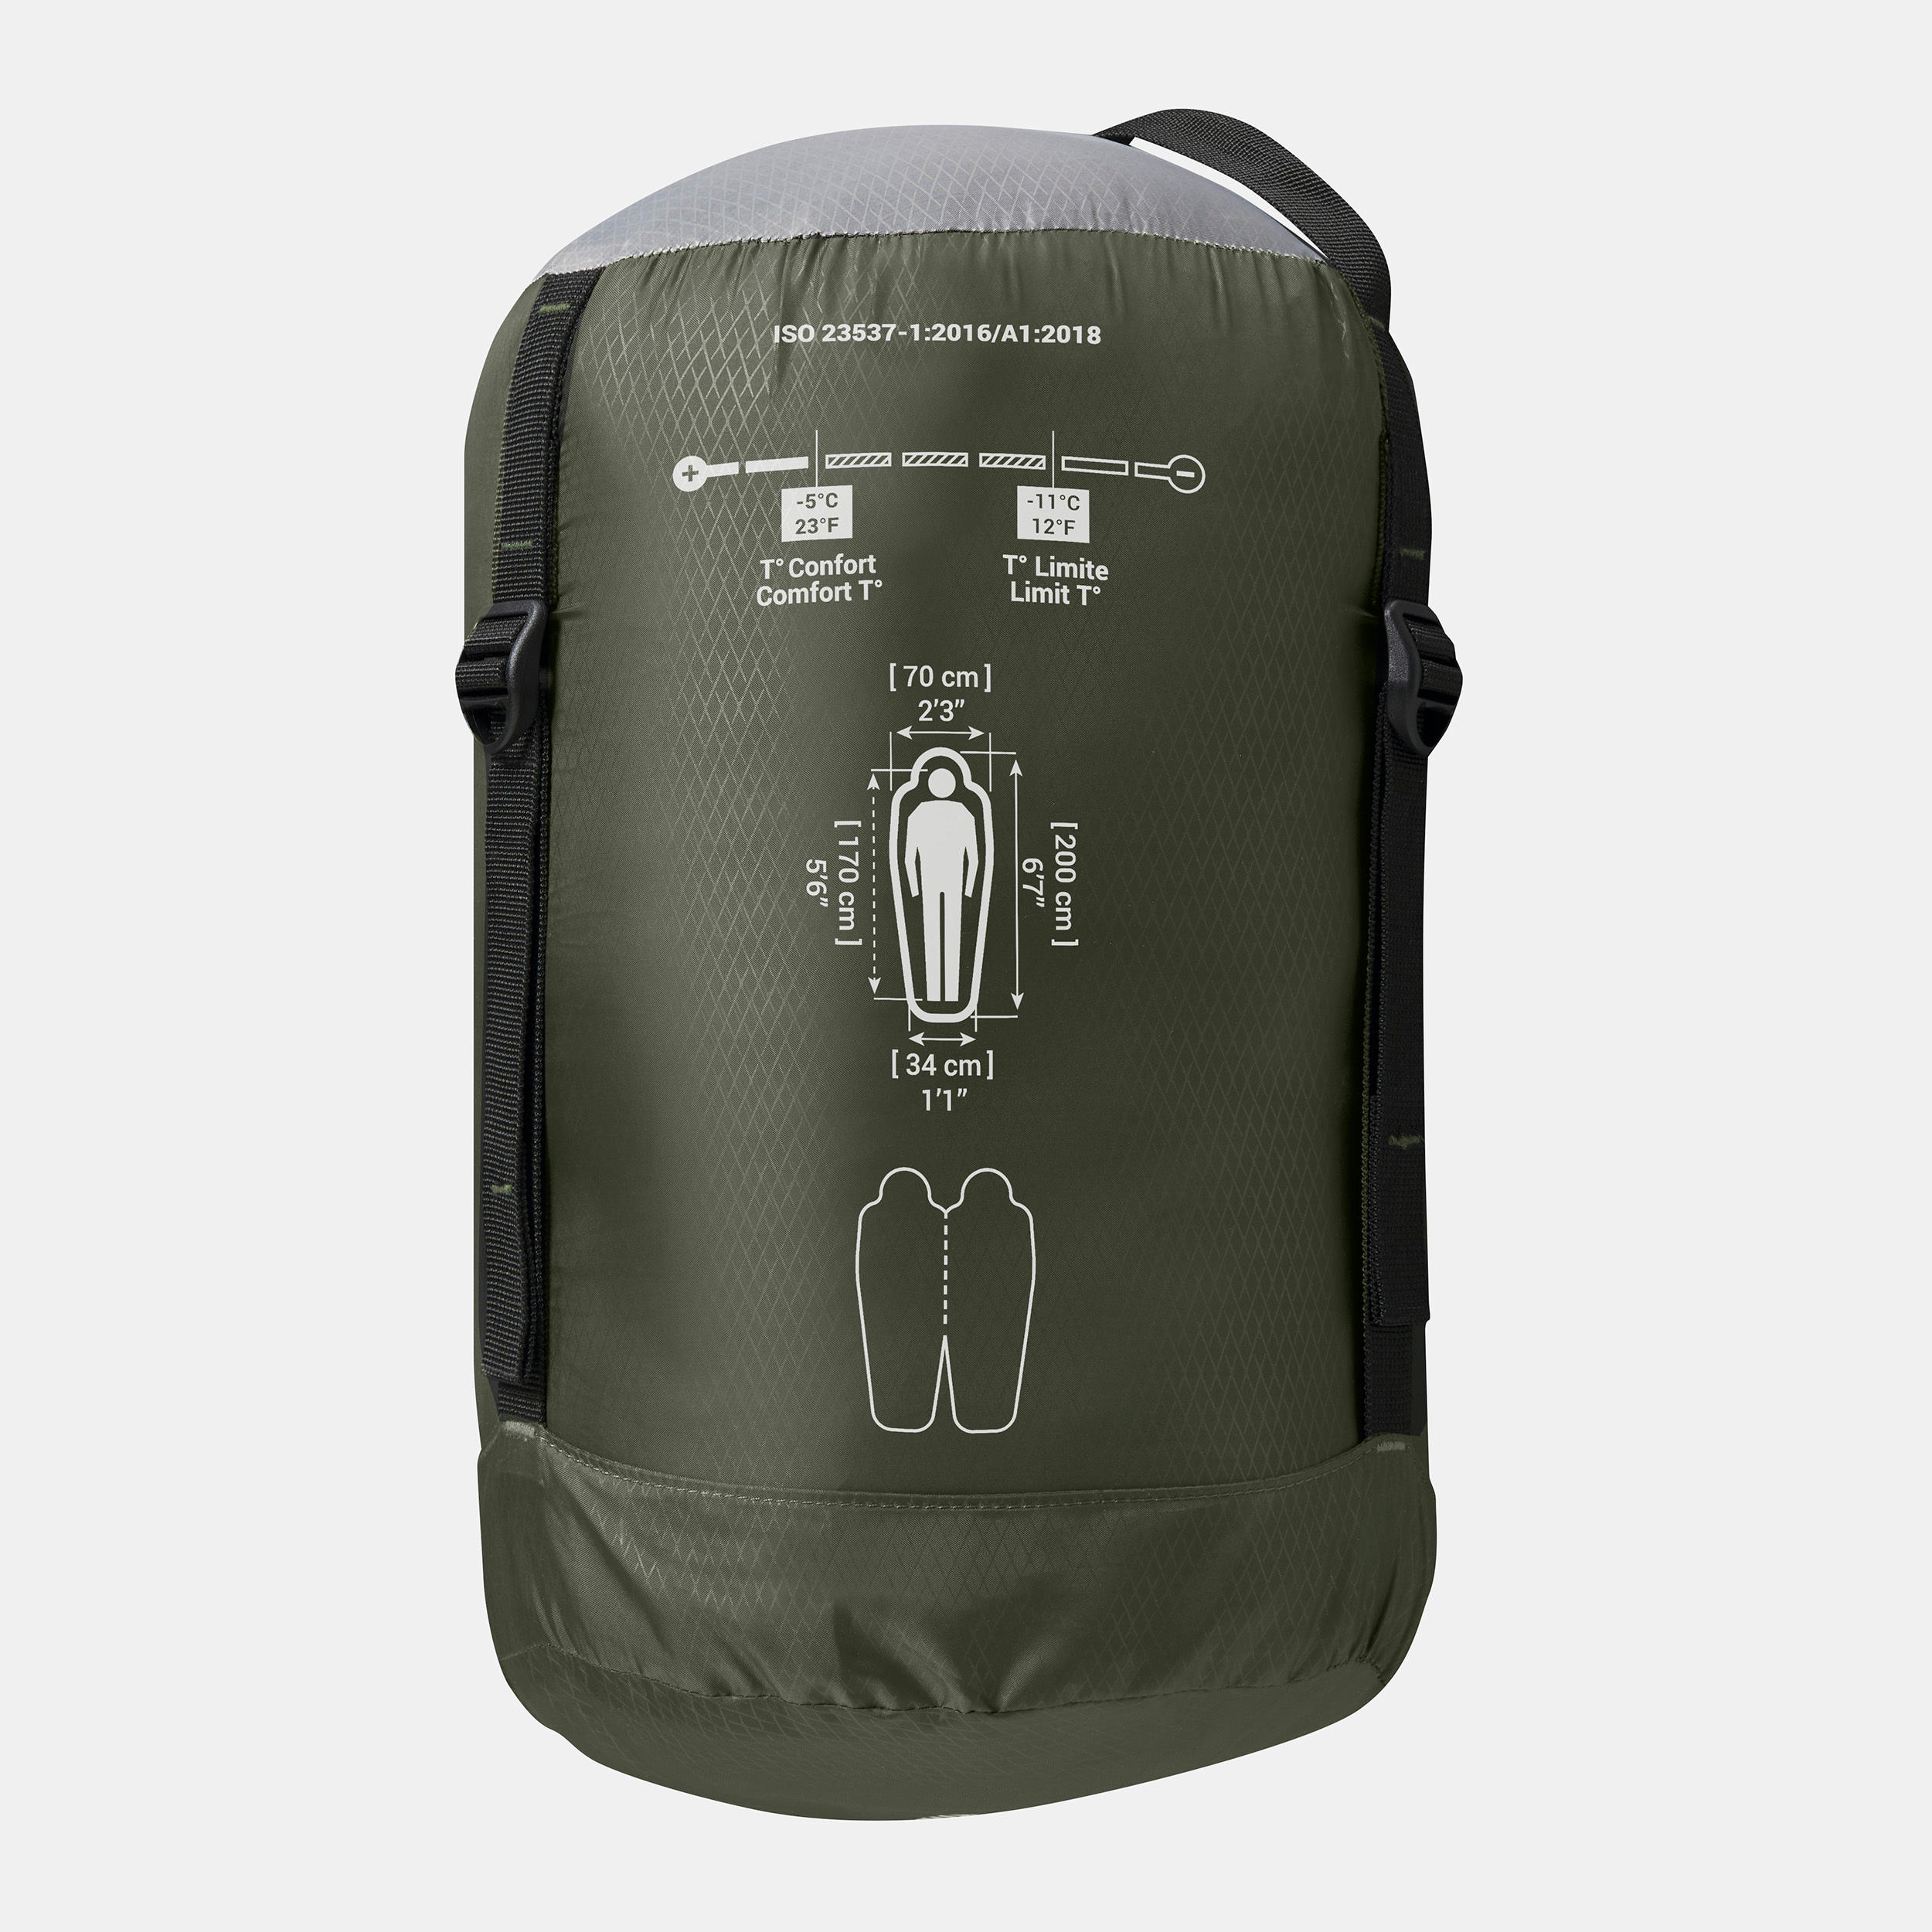 Sleeping Bag - 5°C – MT 500 - Dark green, Granite - Forclaz - Decathlon